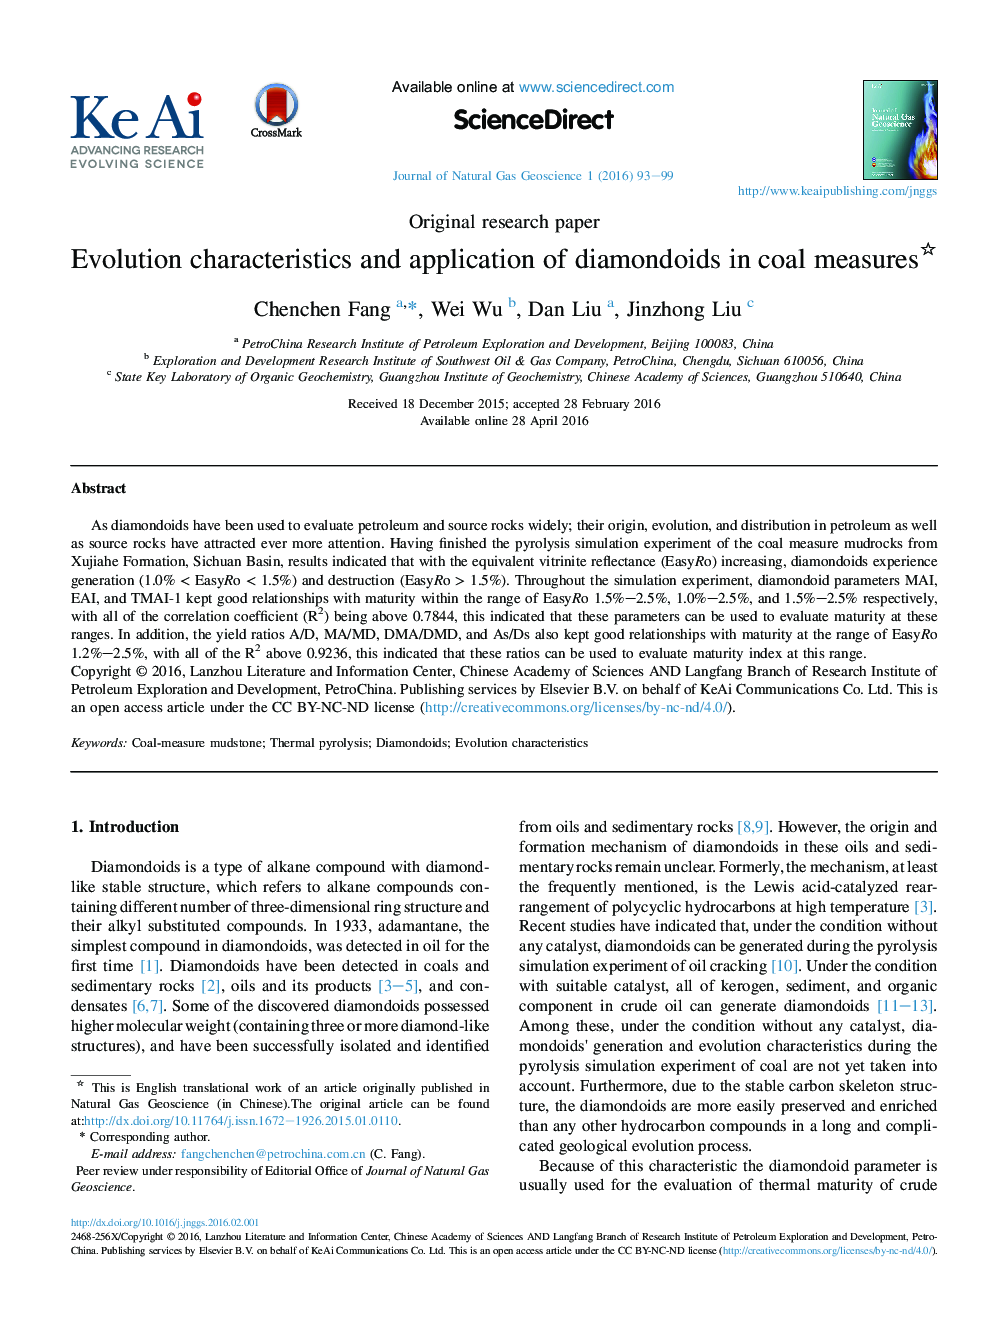 Evolution characteristics and application of diamondoids in coal measures 